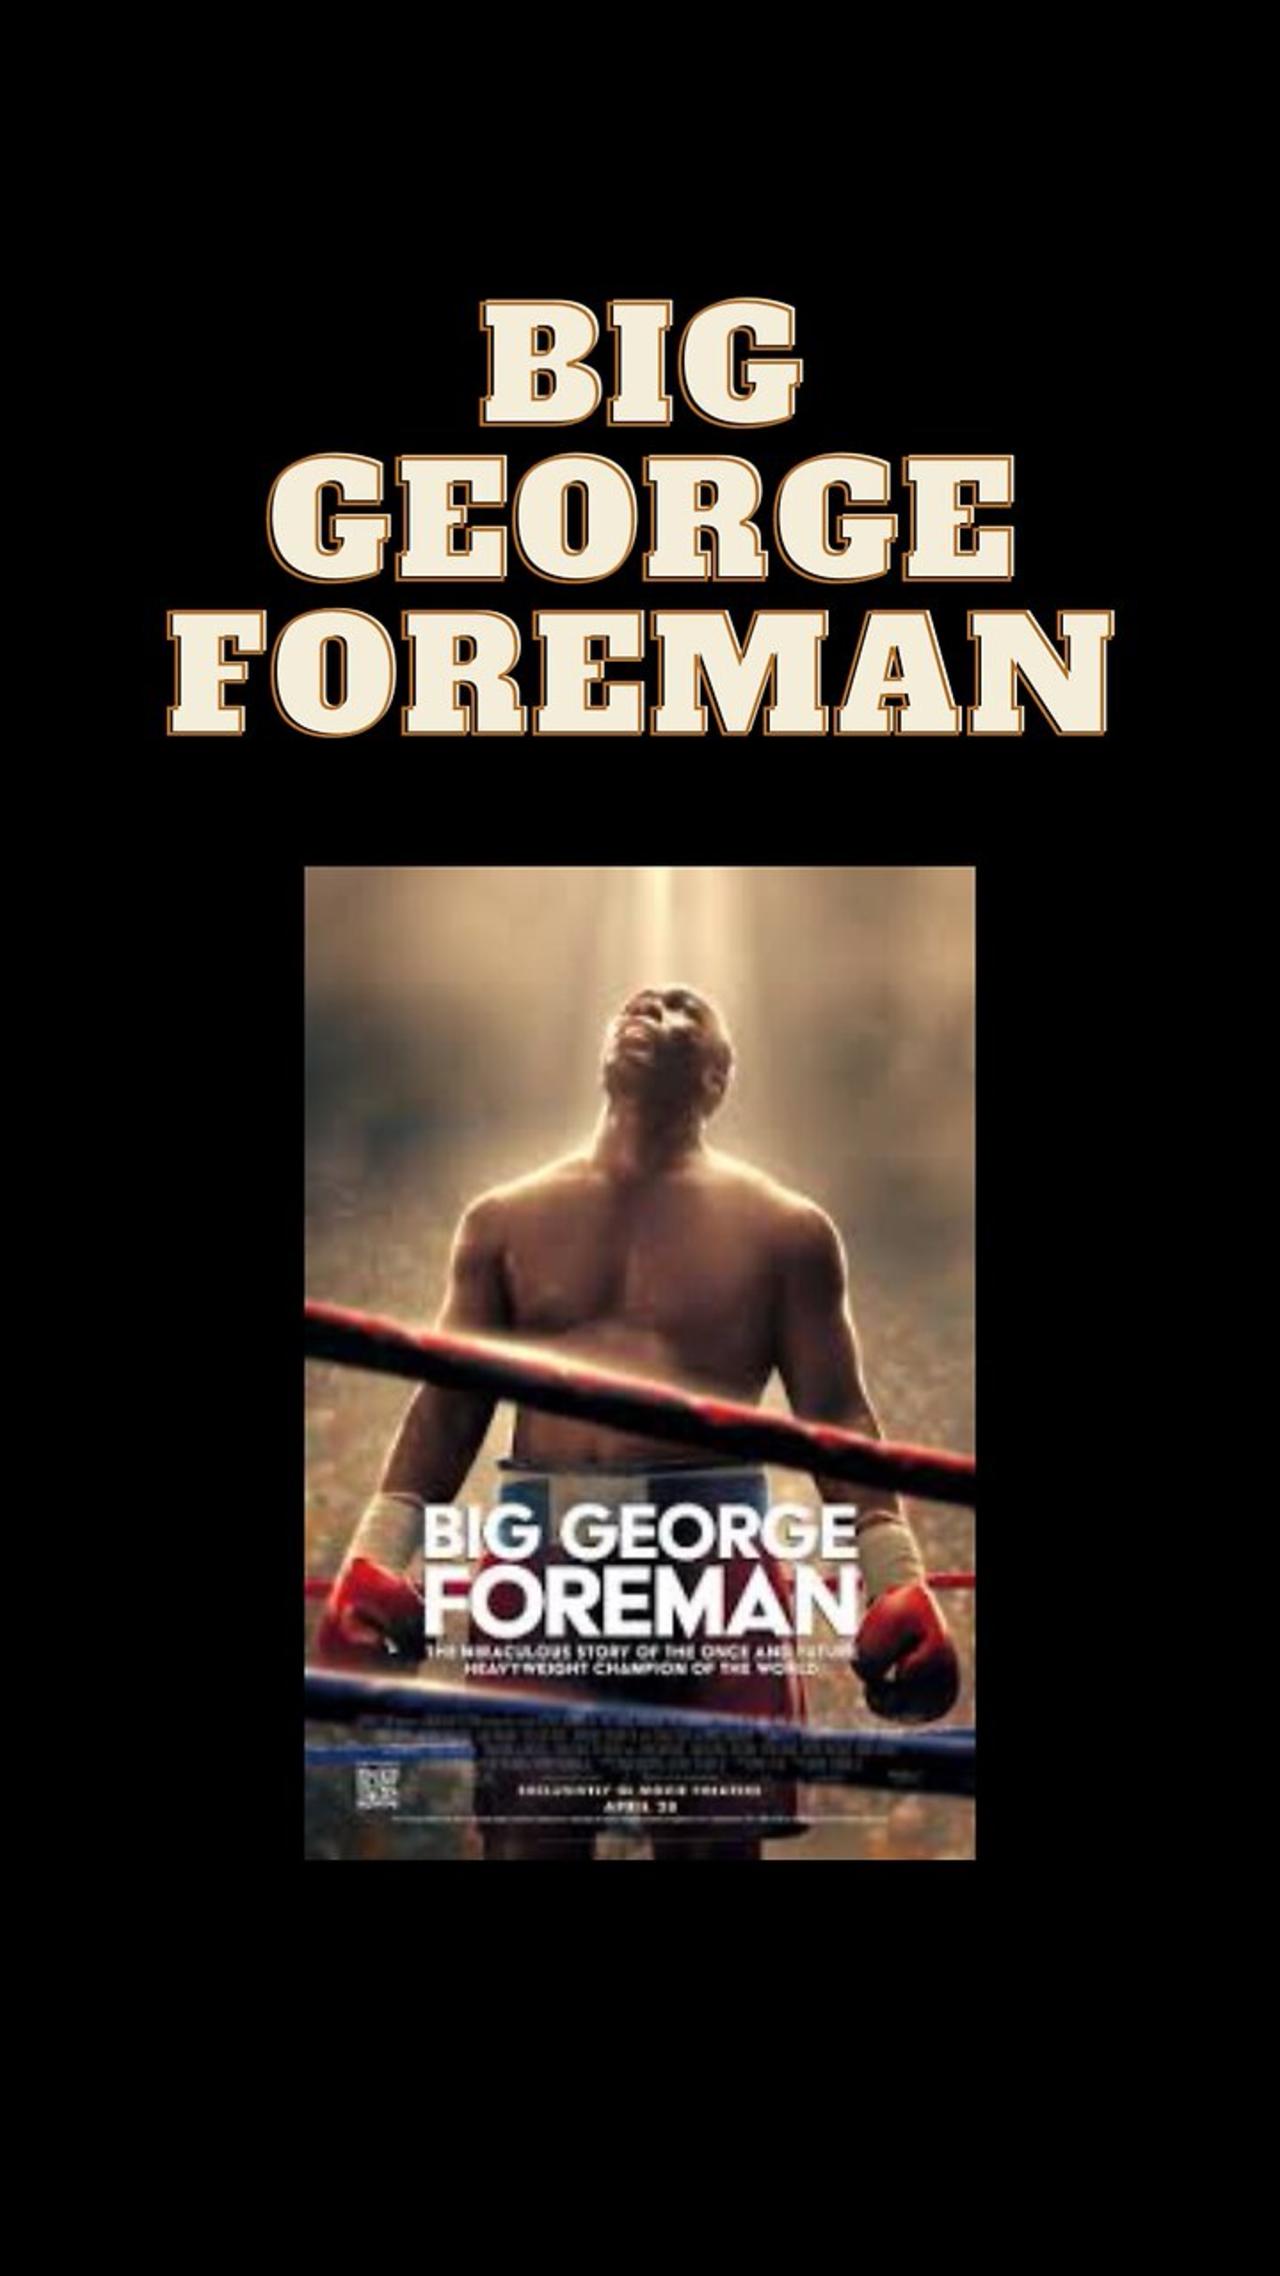 A Movie To Watch “Big George Foreman”